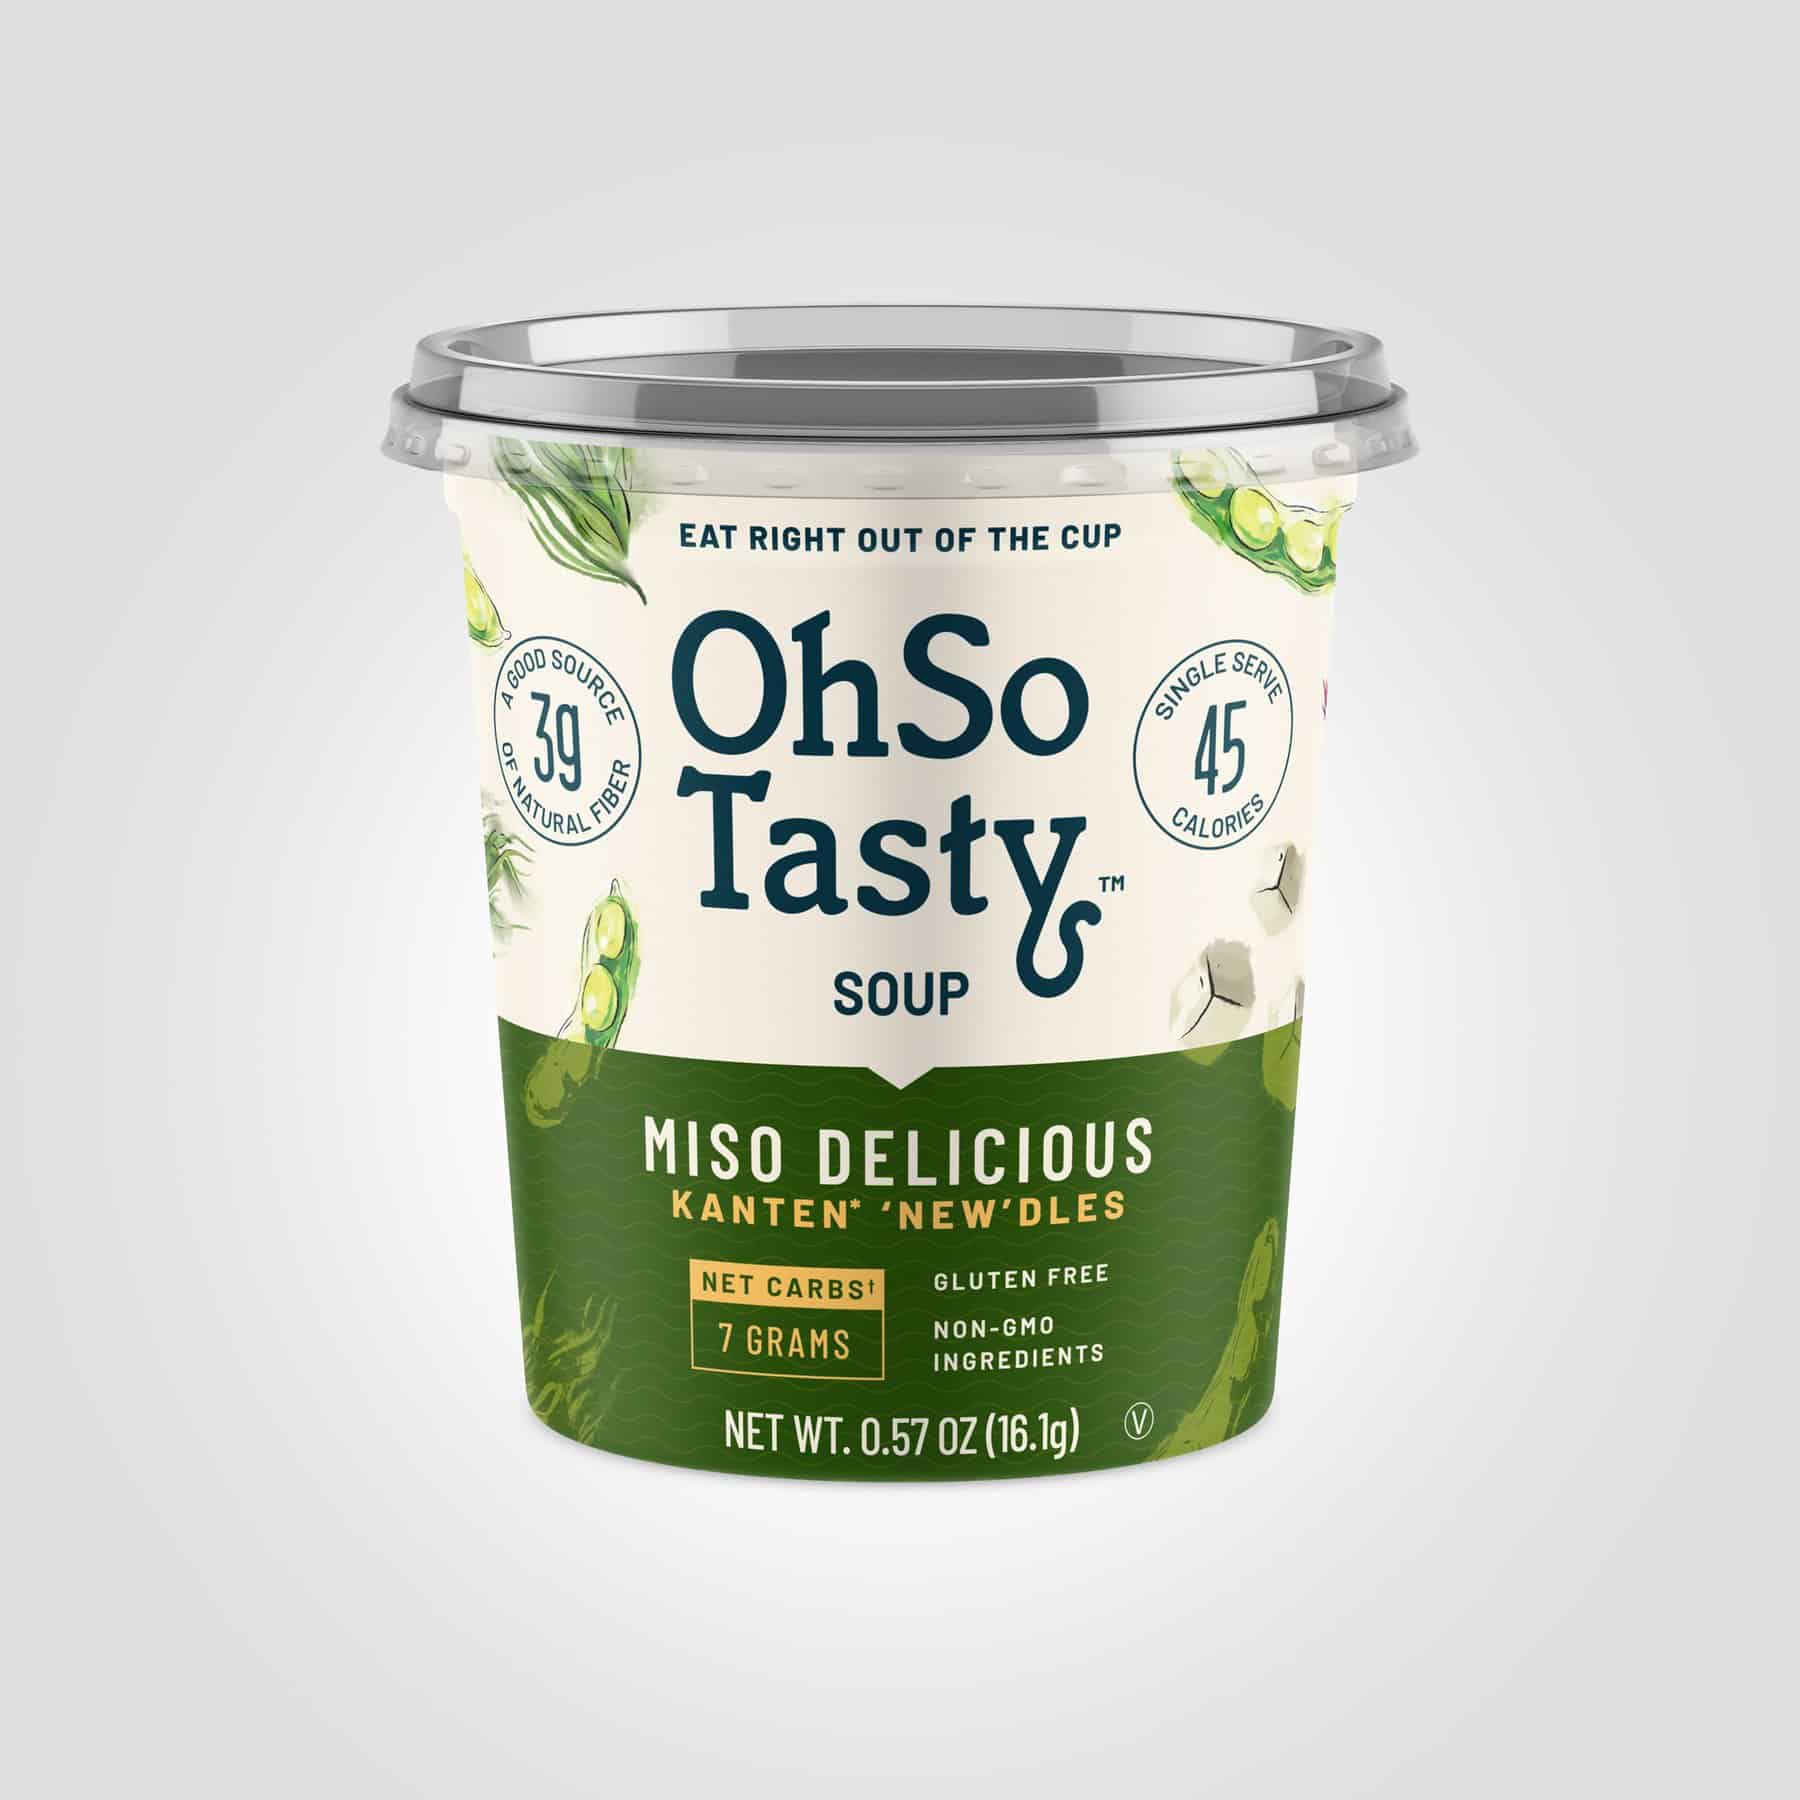 OhSo Tasty food package design mockup